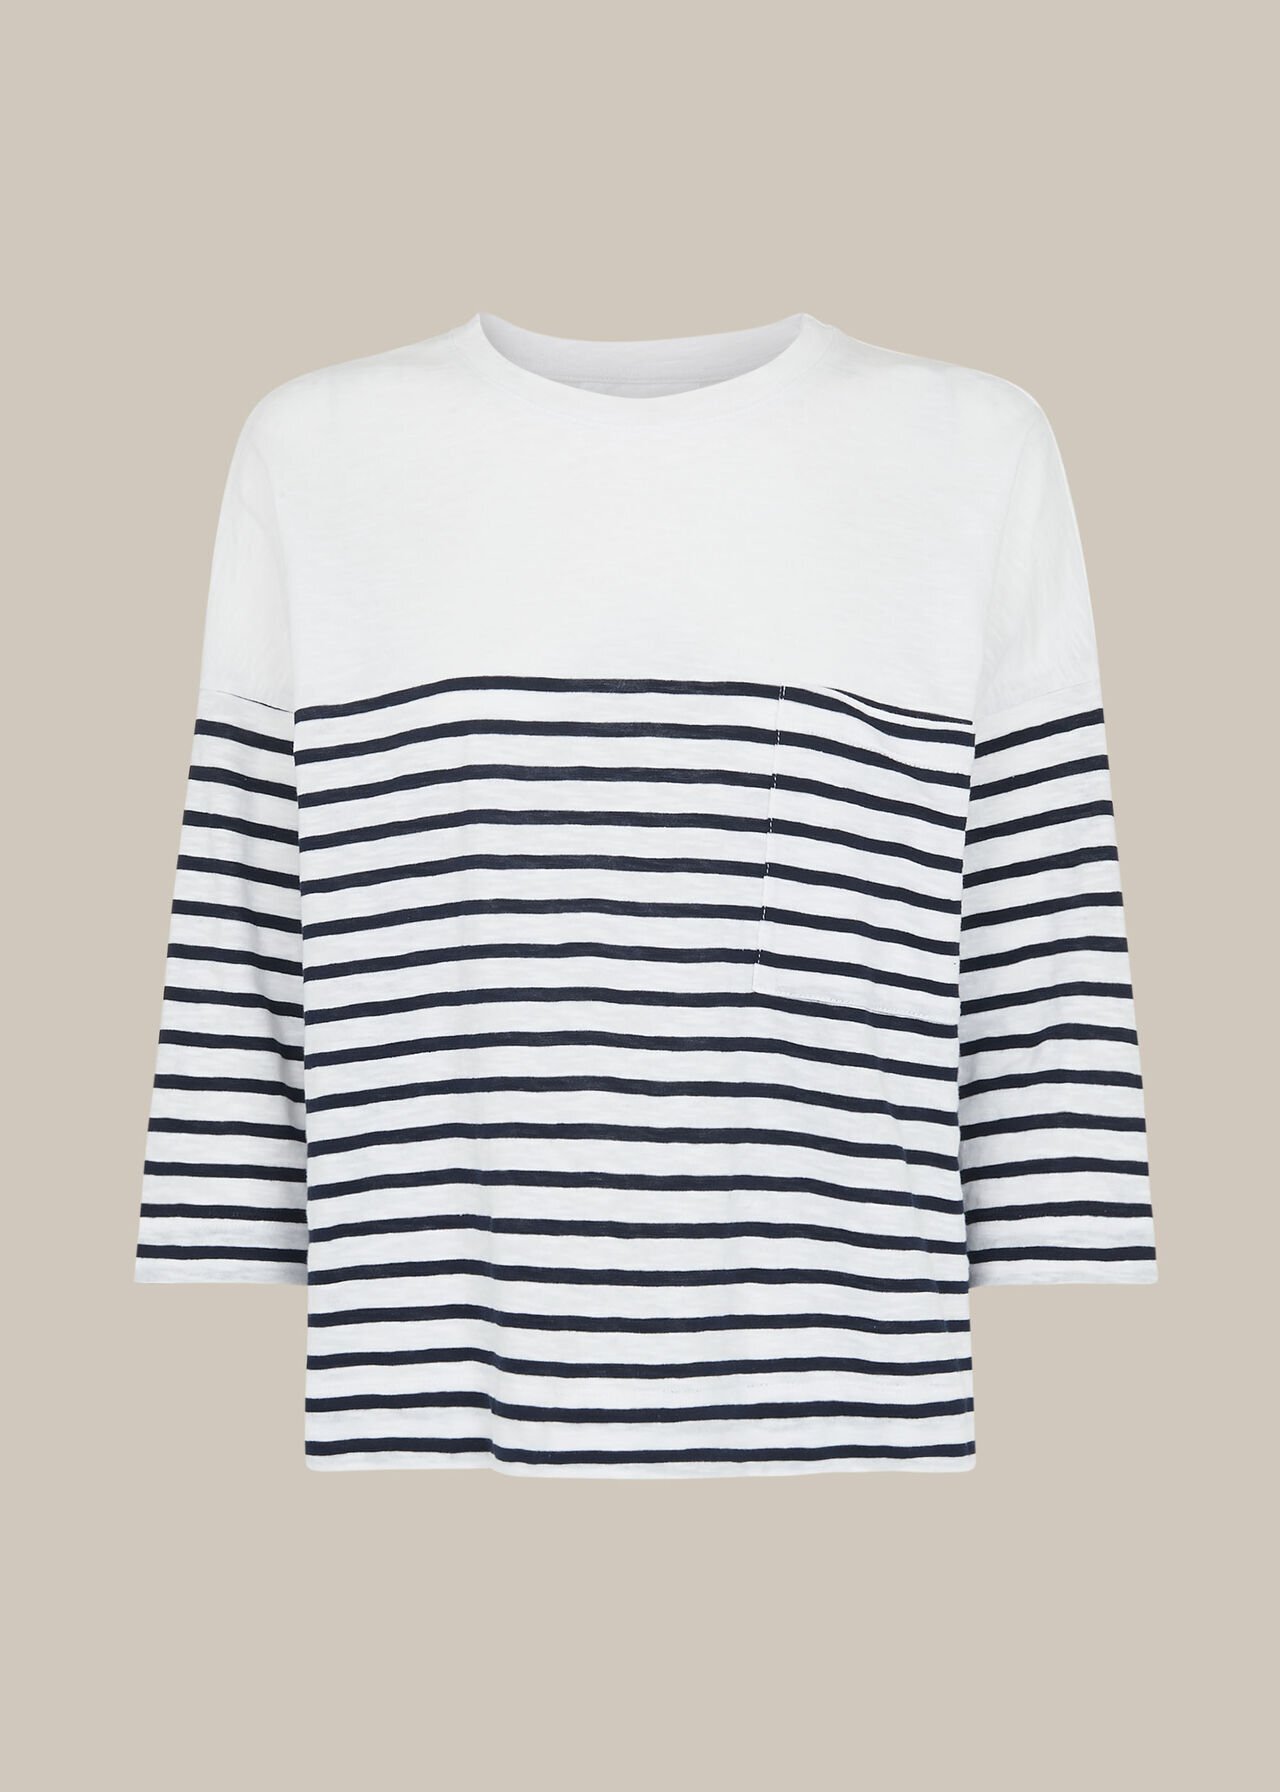 whistles-breton-stripe-cotton-pocket-top-navy-multi-99.jpg